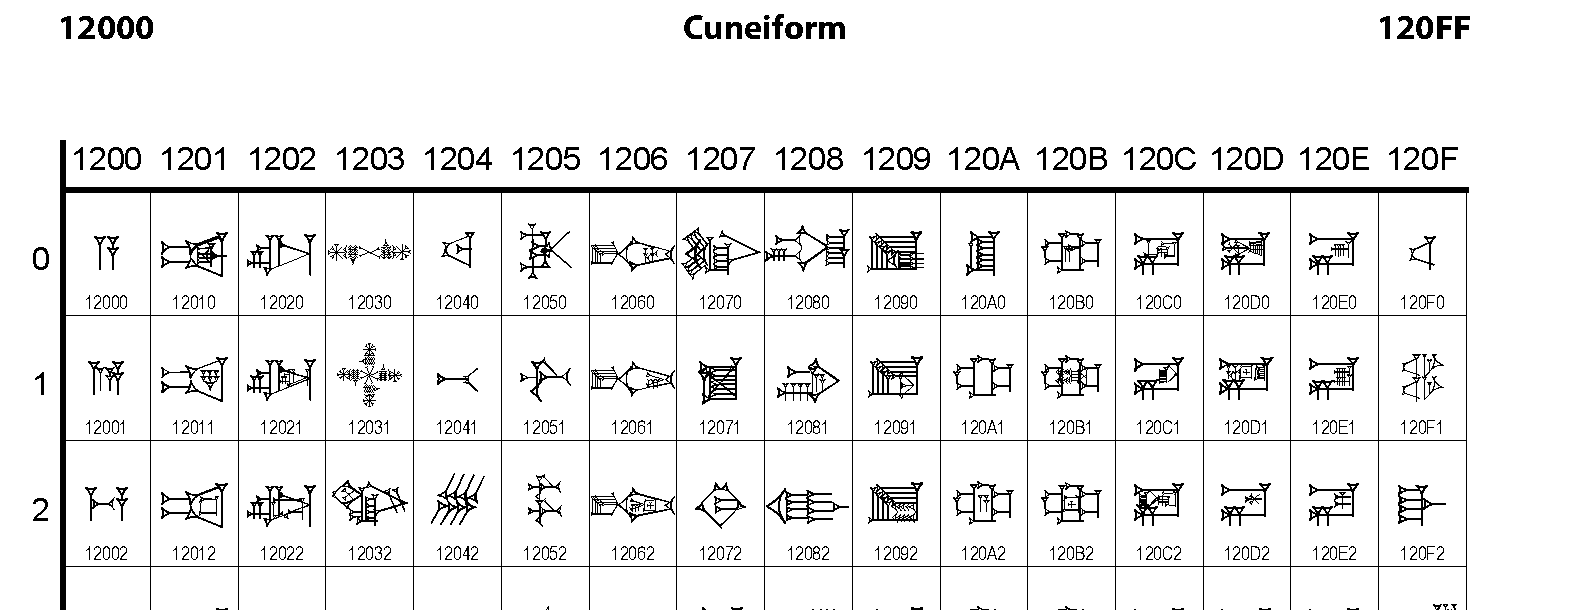 Unicode - Cuneiform